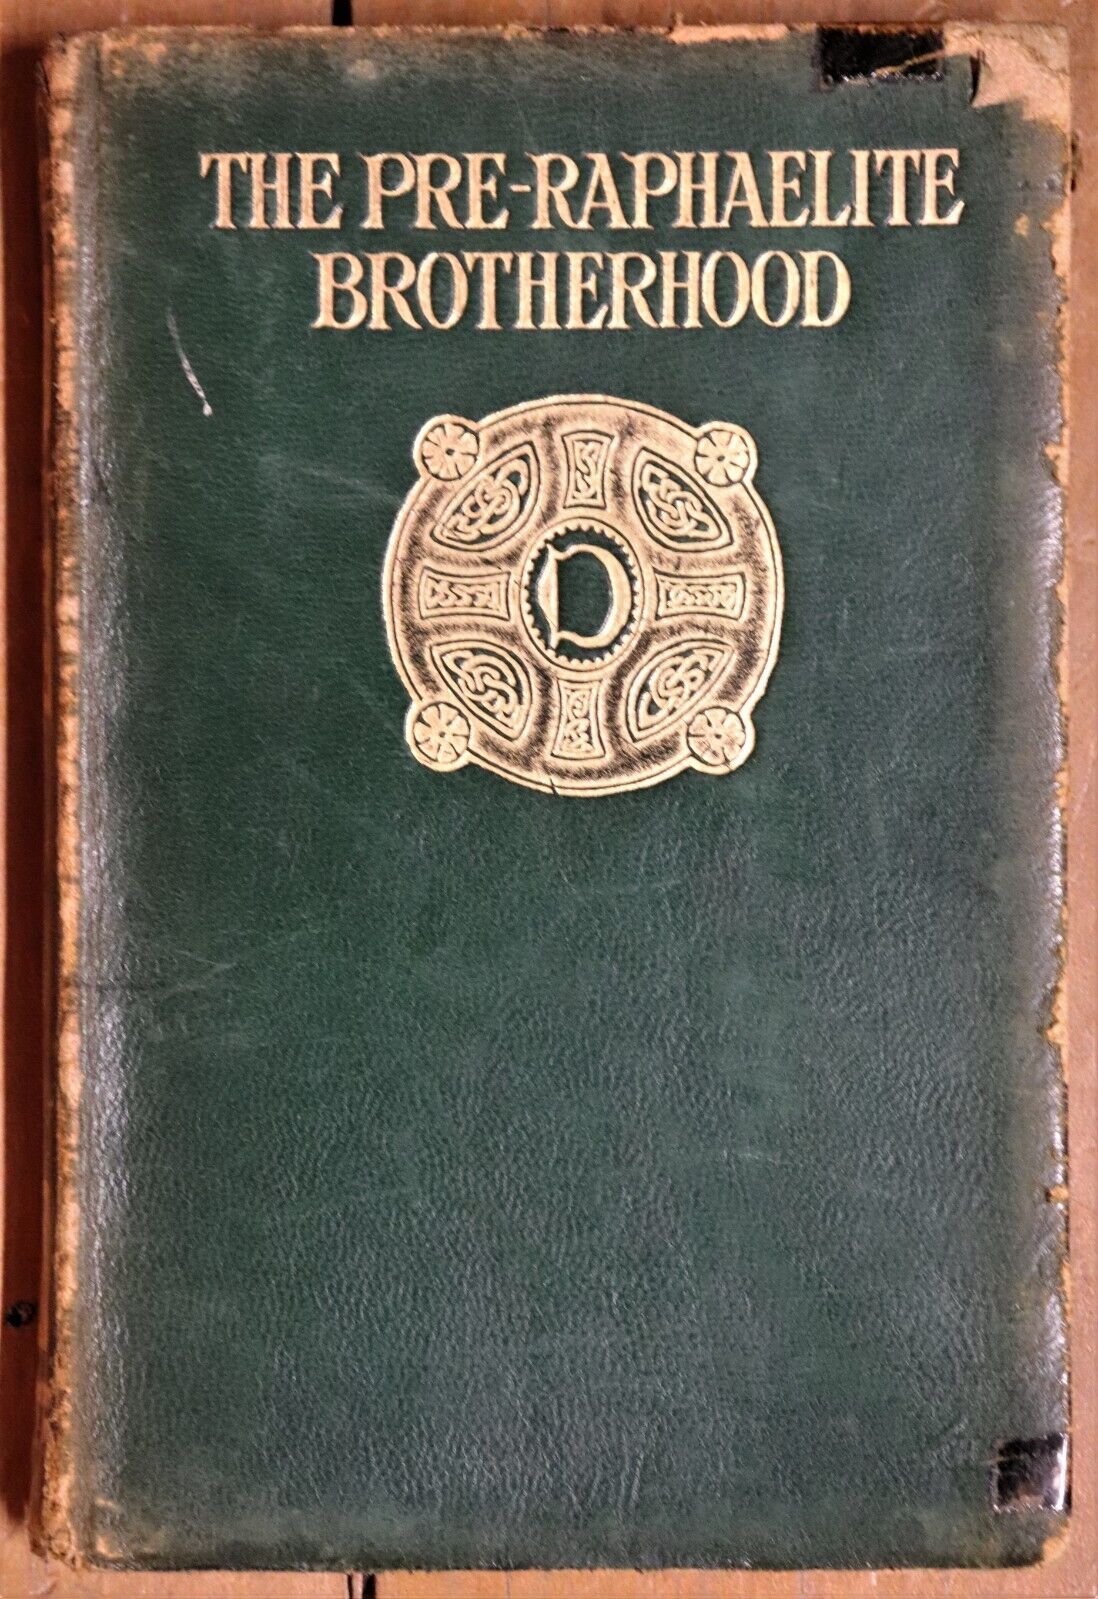 The Pre-Raphaelite Brotherhood - c1907 - Rare Antique Art Book